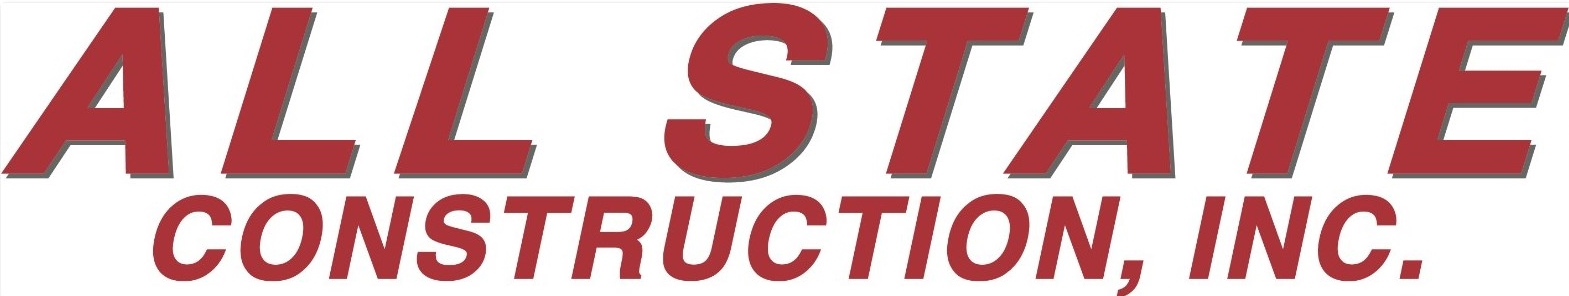 All State Construction, Inc. Company Logo